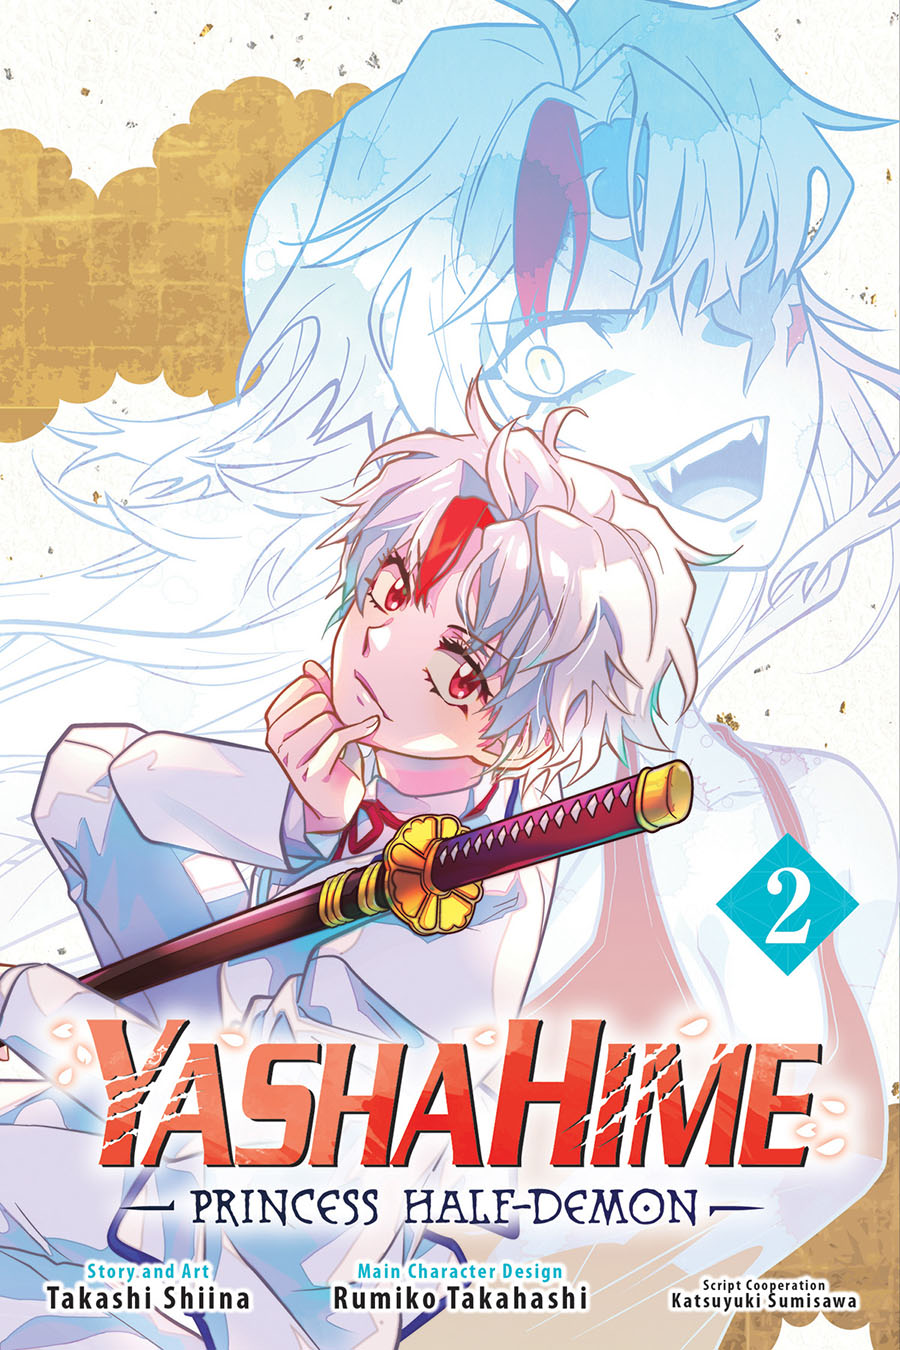 YashaHime Princess Half-Demon Vol 2 GN